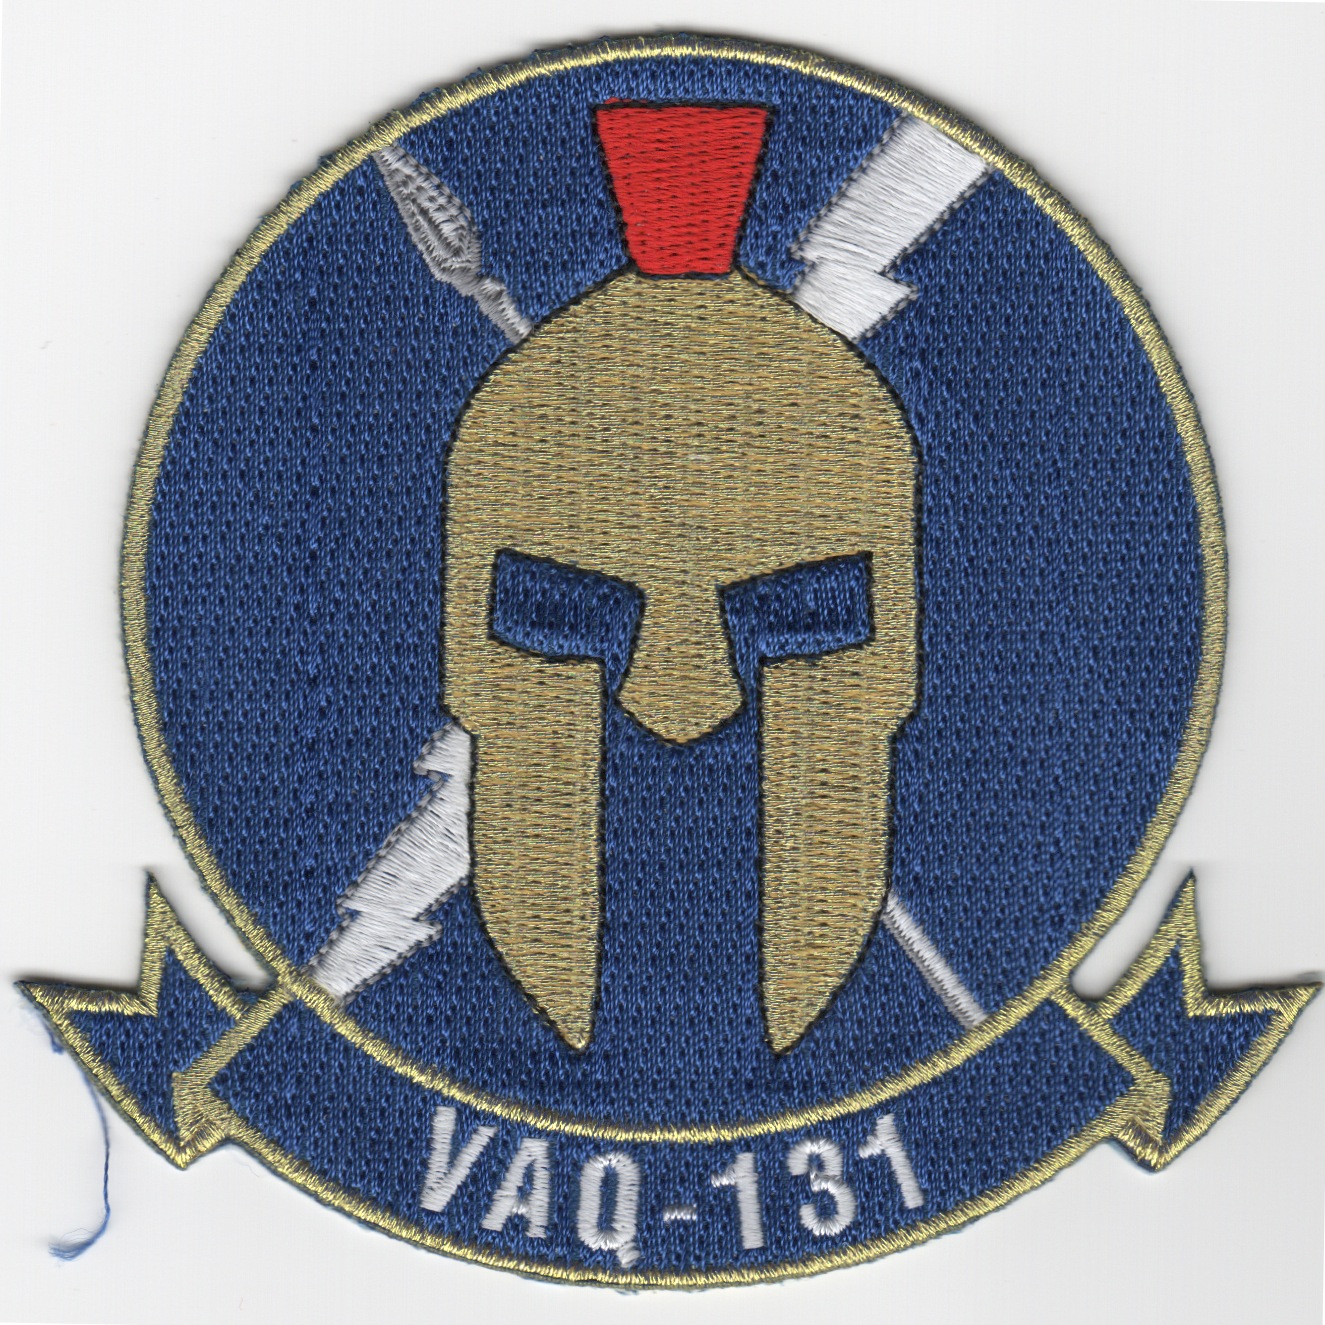 VAQ-131 Squadron Patch (GOLD Mask)